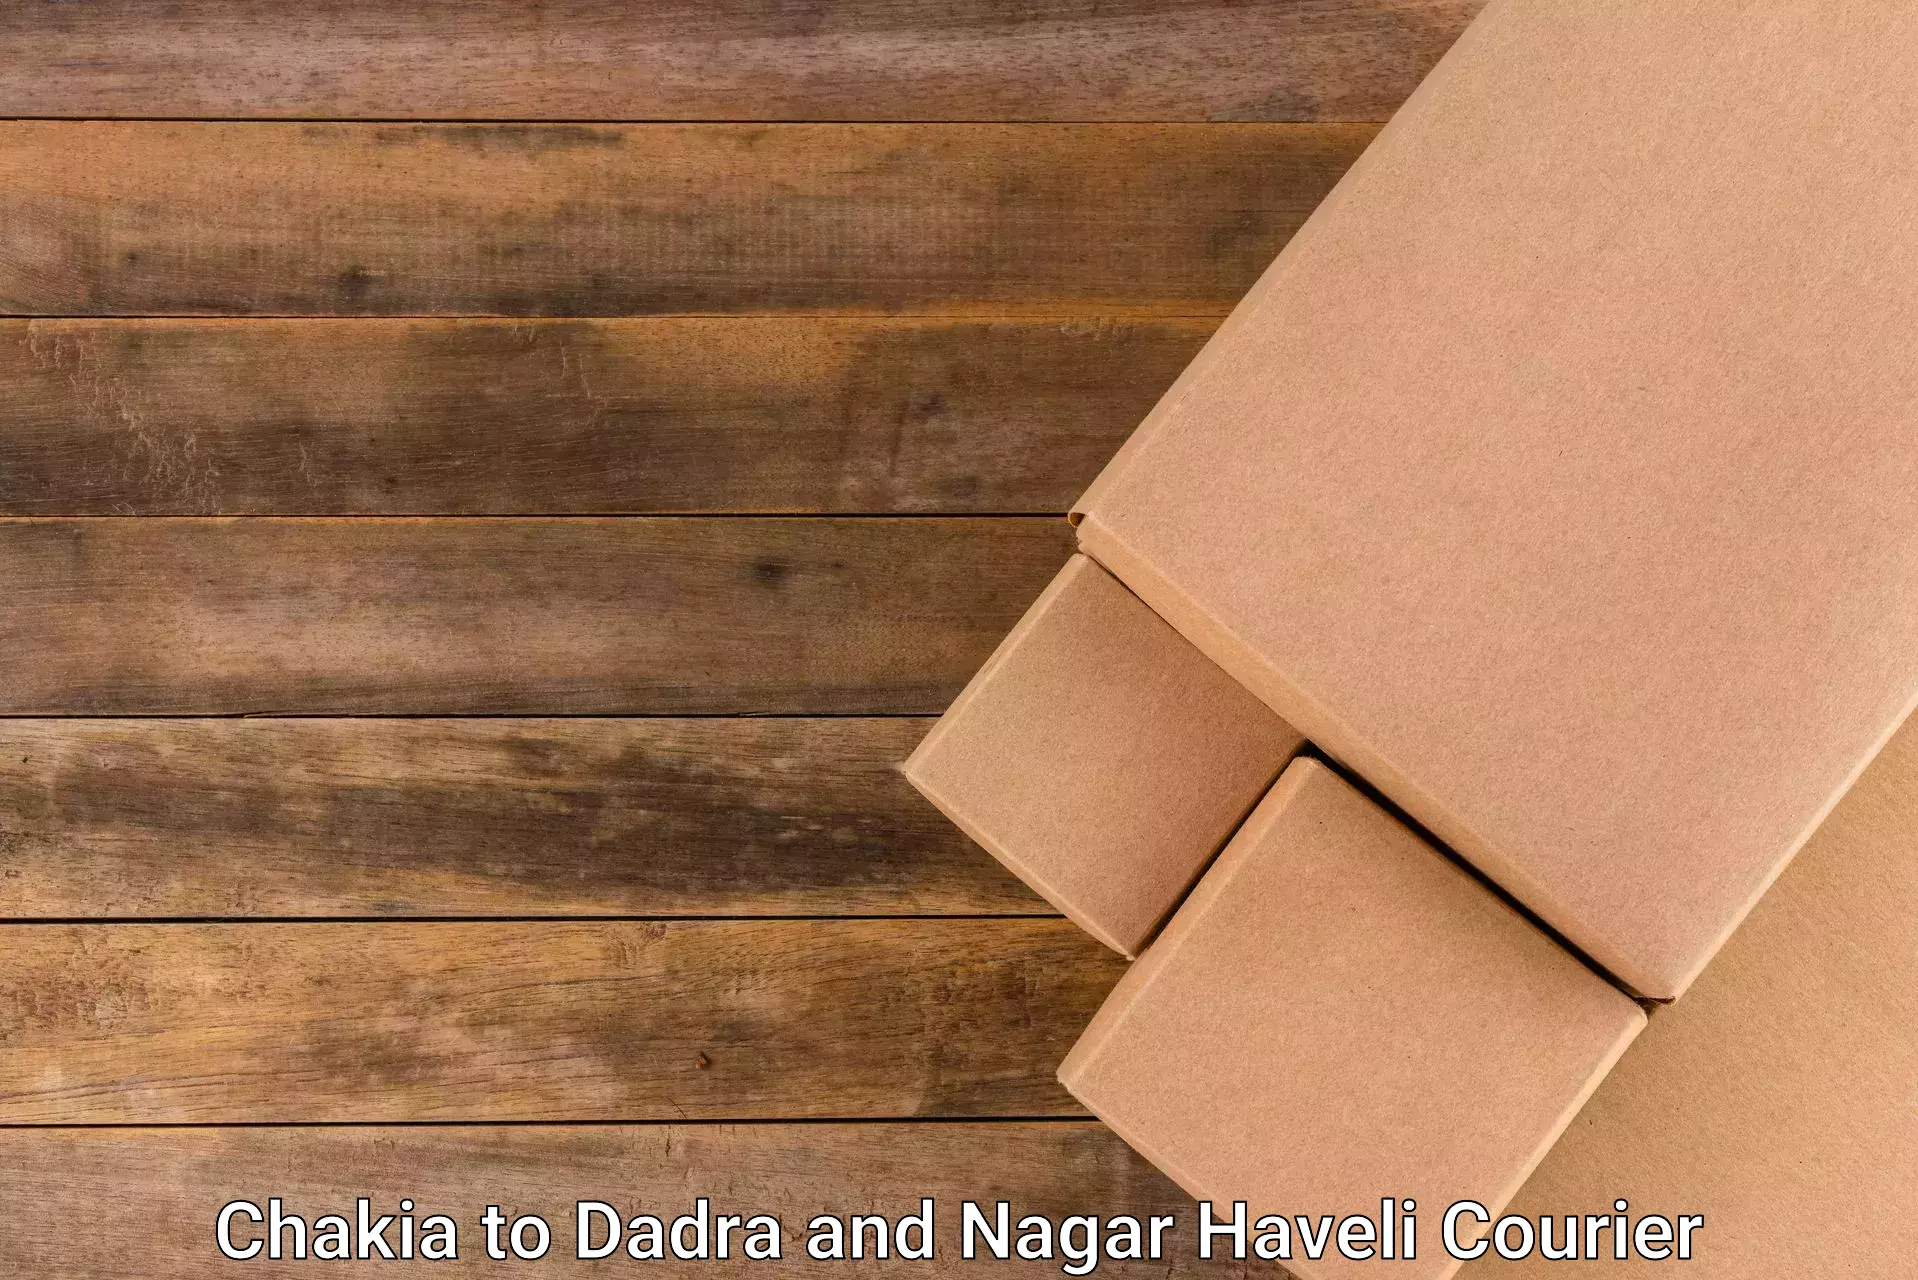 International parcel service Chakia to Dadra and Nagar Haveli